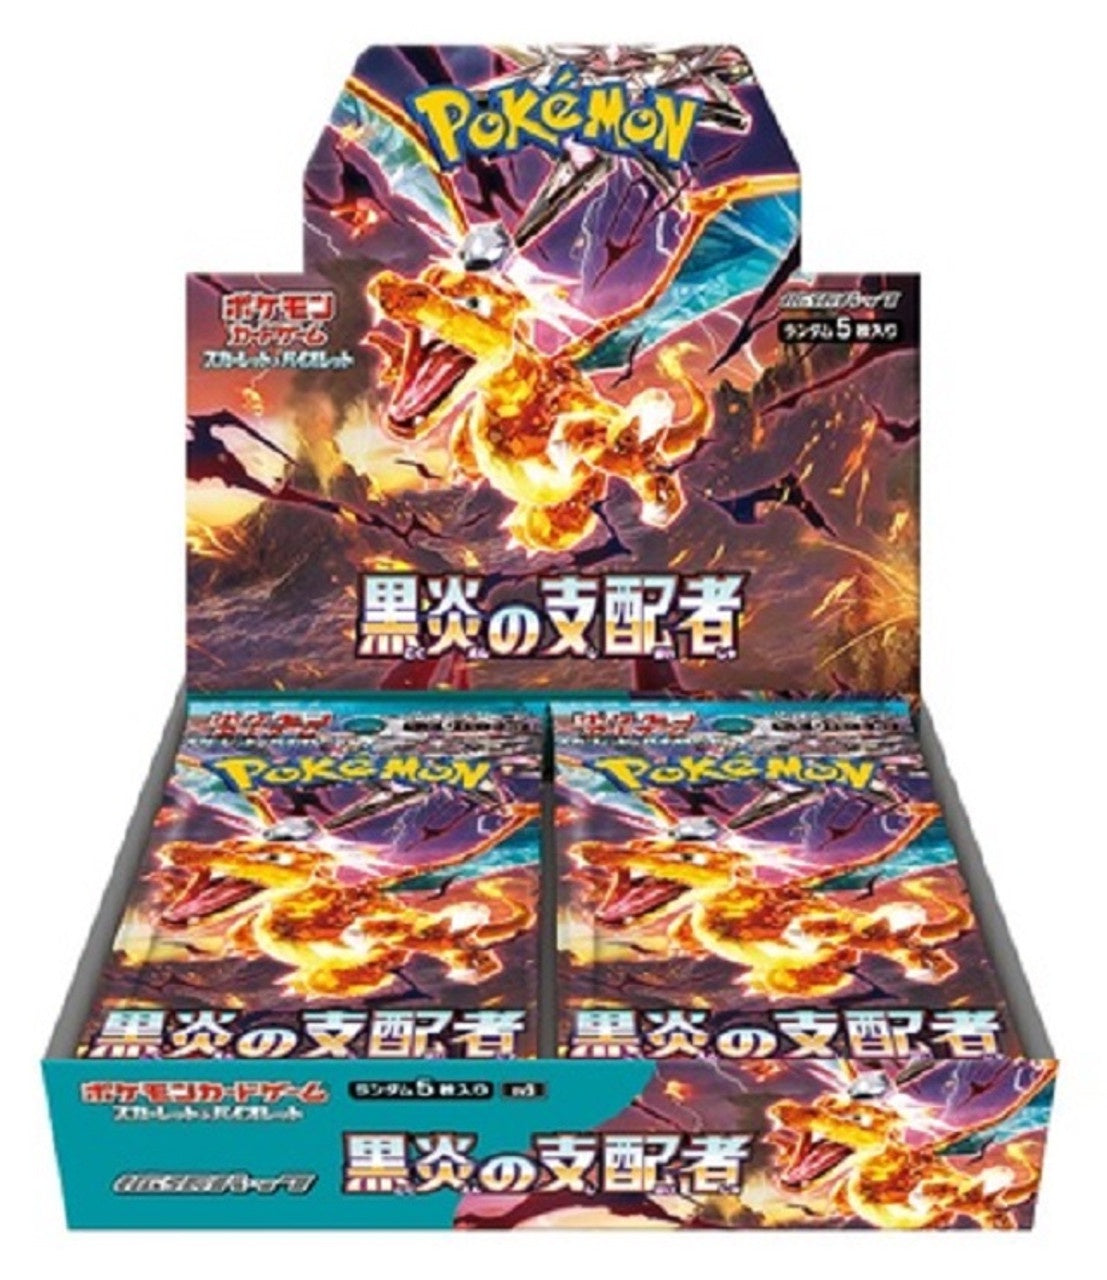 Pokemon Ruler of the Black Flame SV3 - Booster Box (Obsidian Flame) (Japanese)